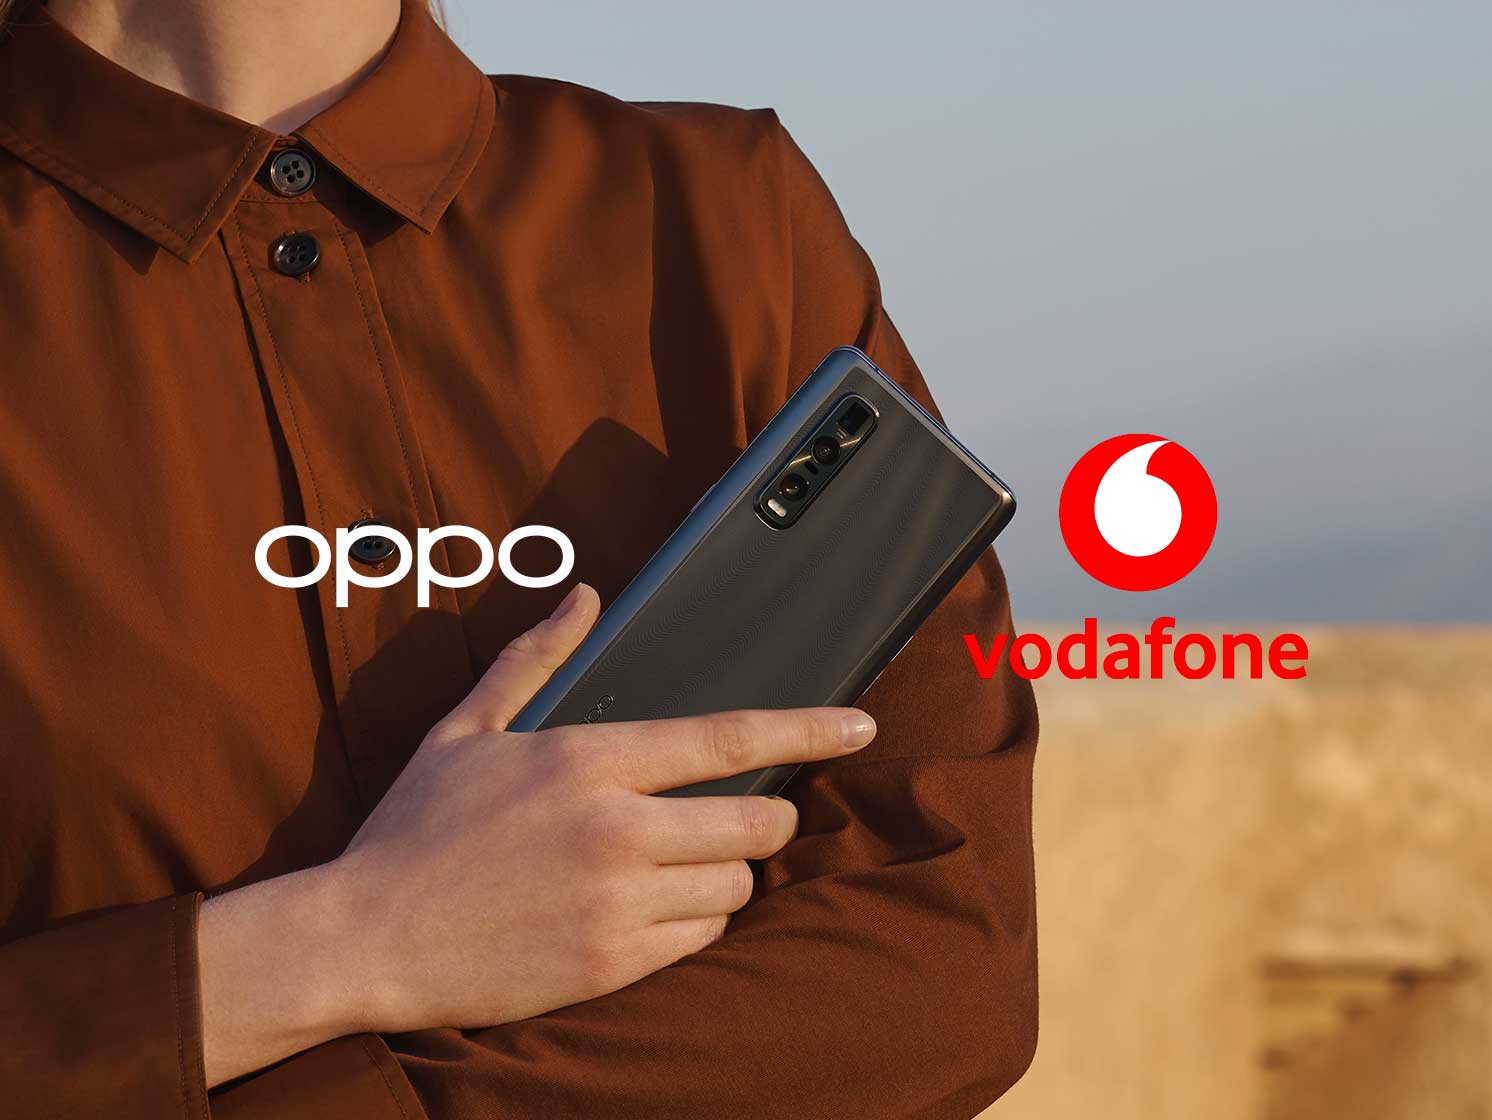 Oppo Bermitra dengan Vodafone untuk Ekspansi Pangsa Eropa